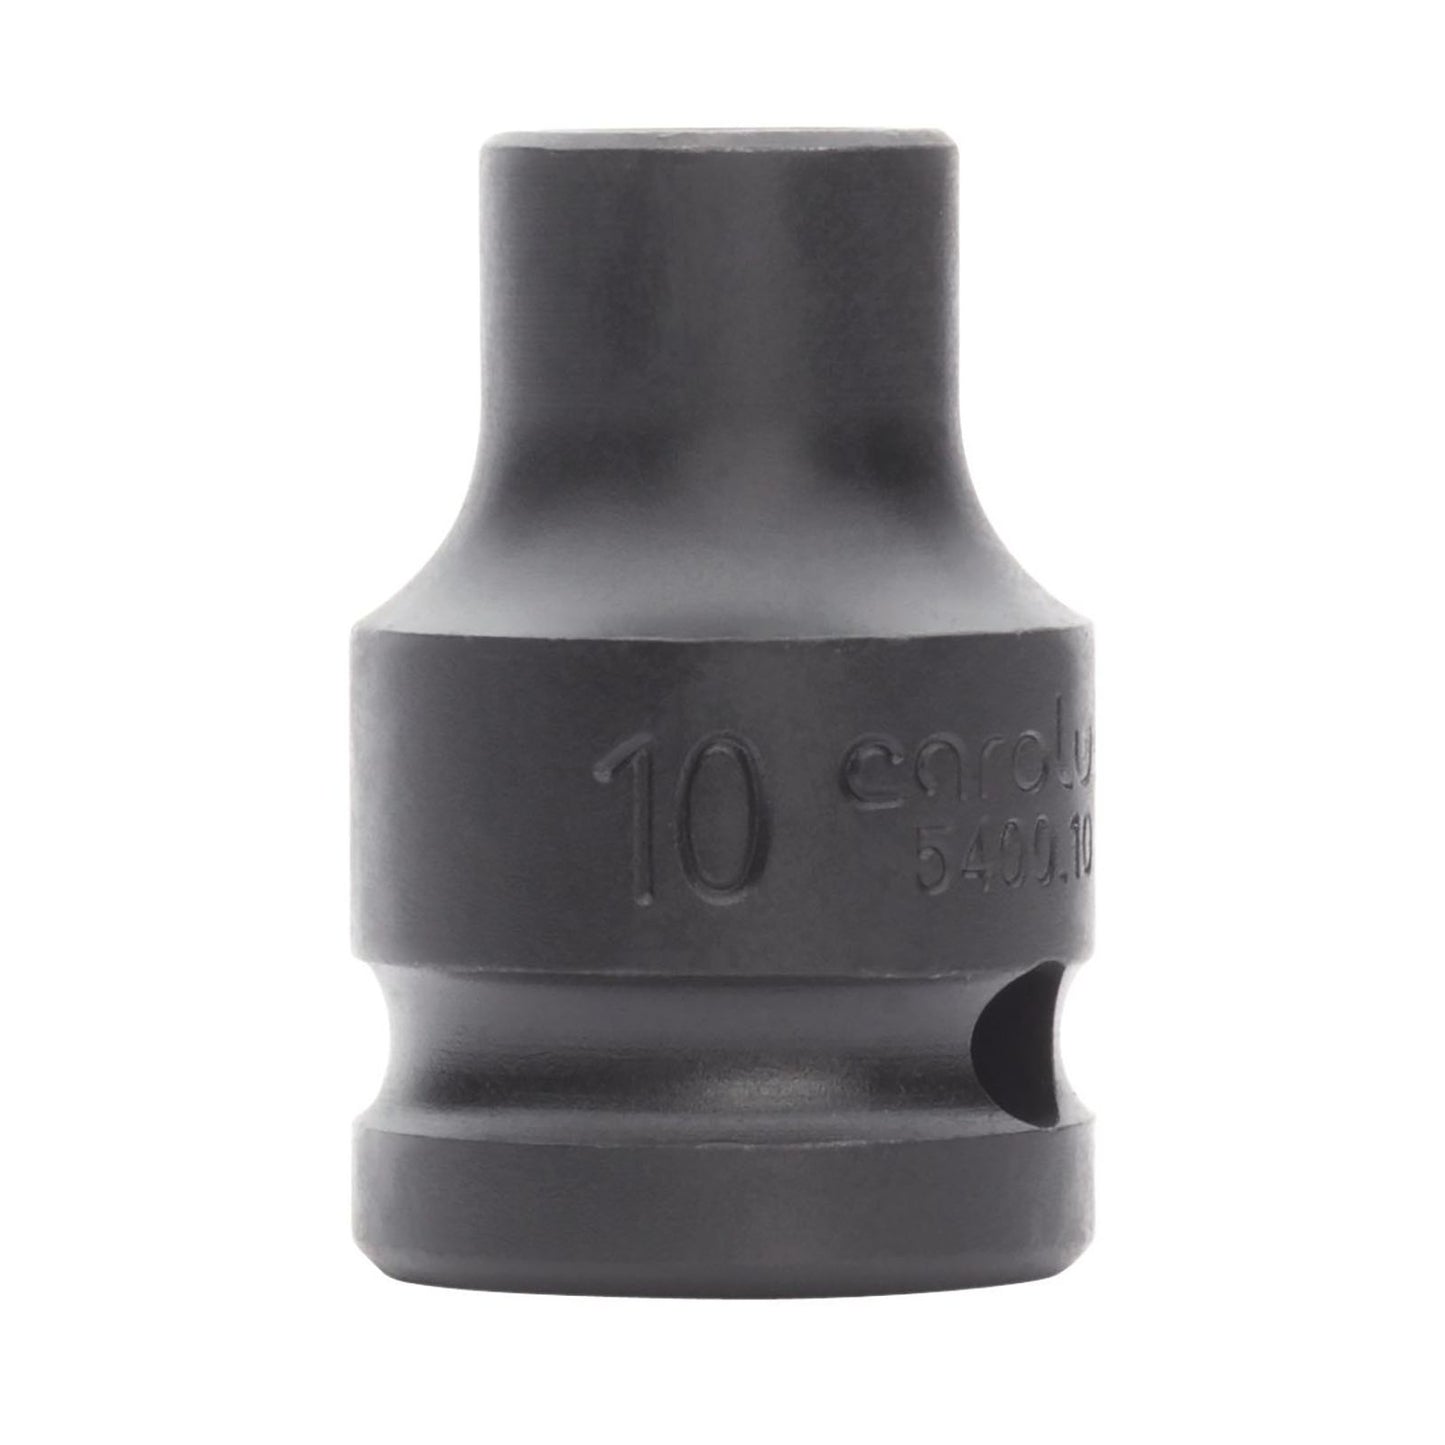 GEDORE K 20 8 - Douille à chocs hexagonale 1/4", 8 mm (6198330)